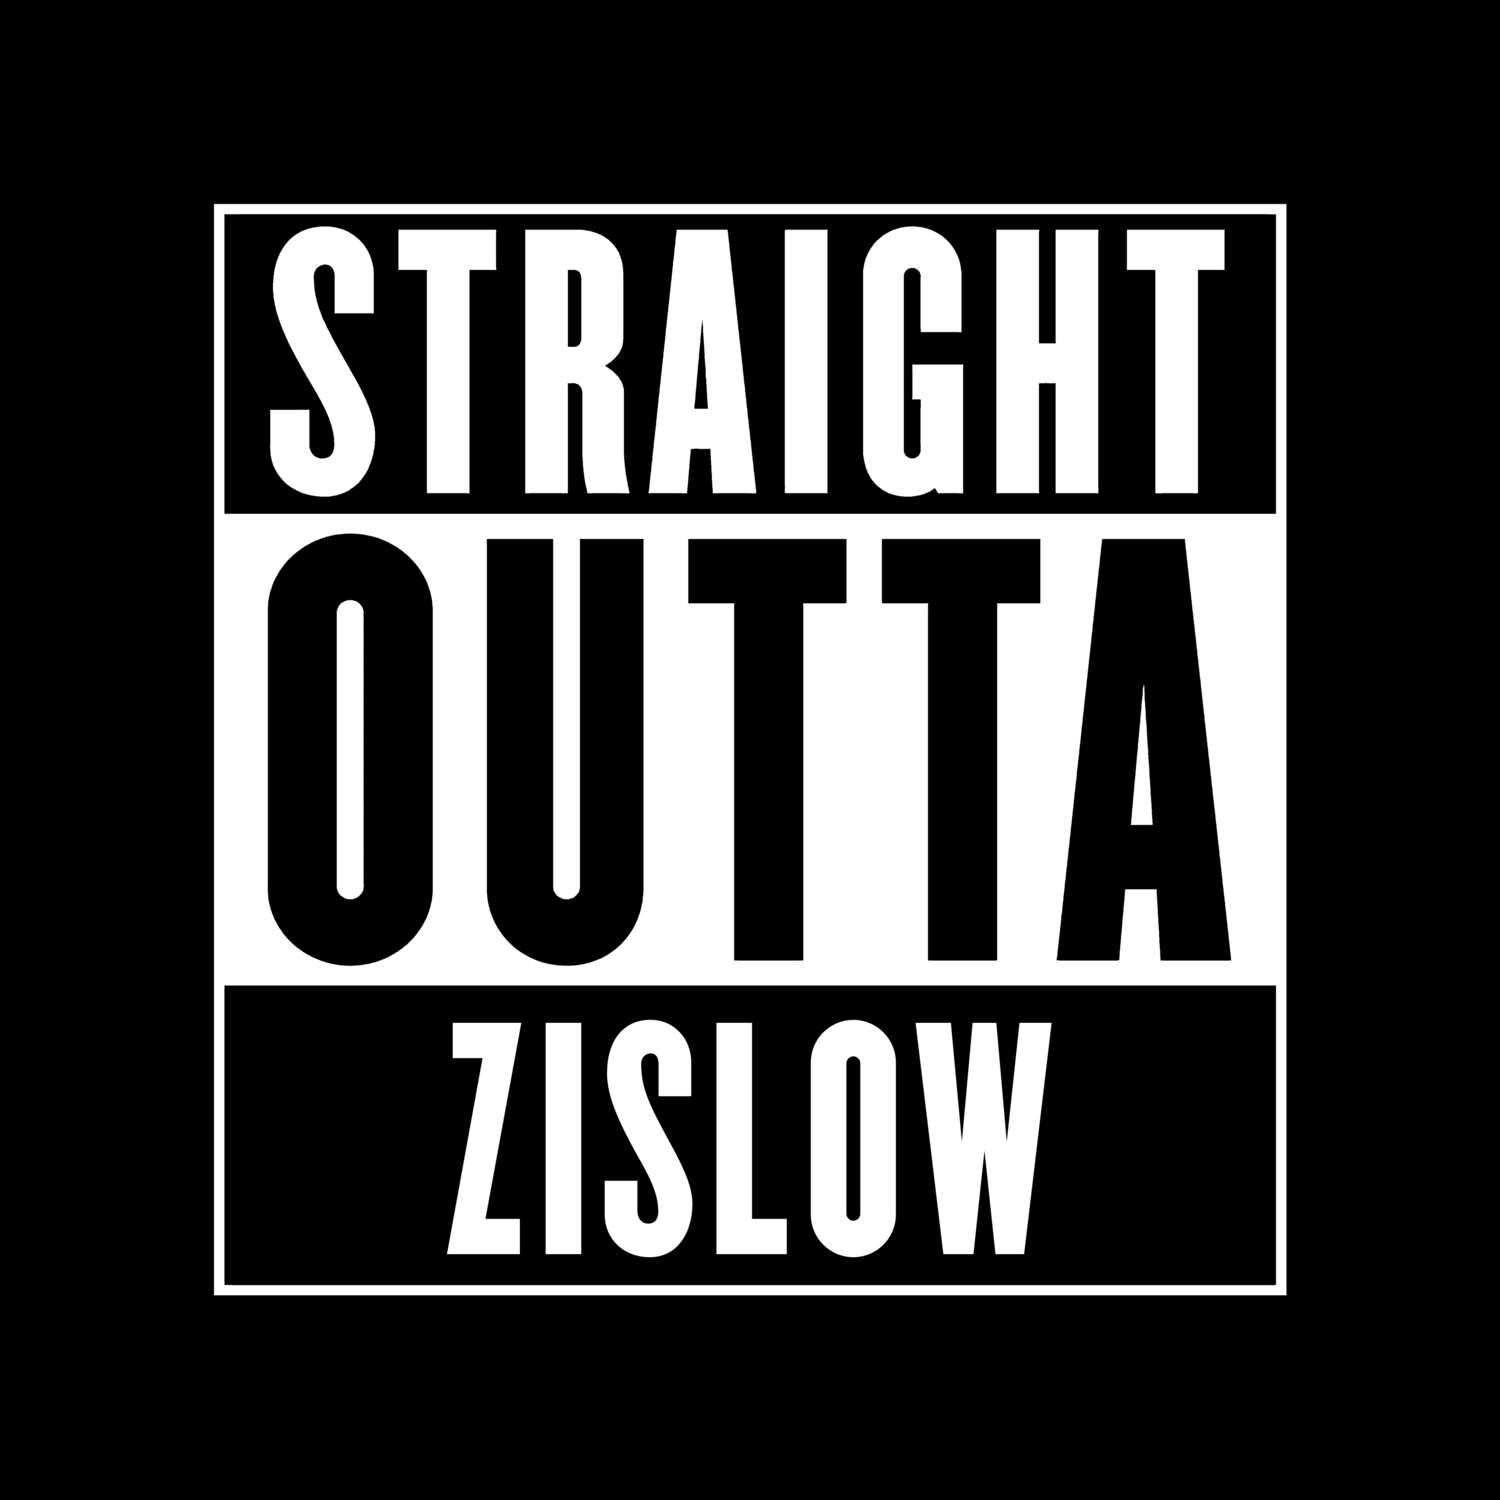 Zislow T-Shirt »Straight Outta«